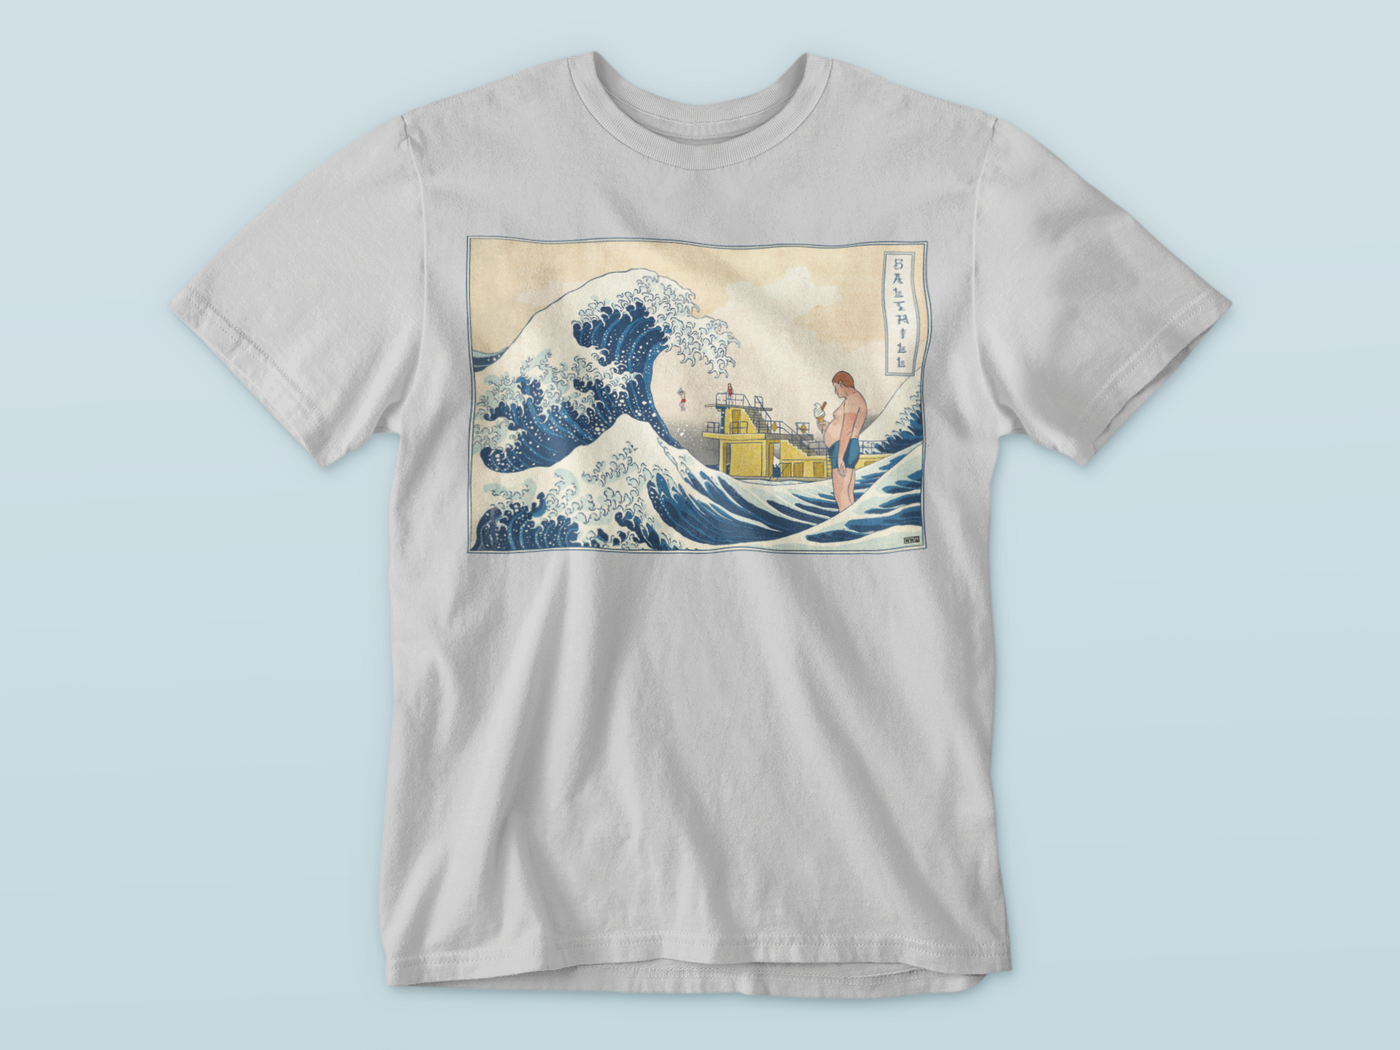 Salthill Wave - Kids T-shirt